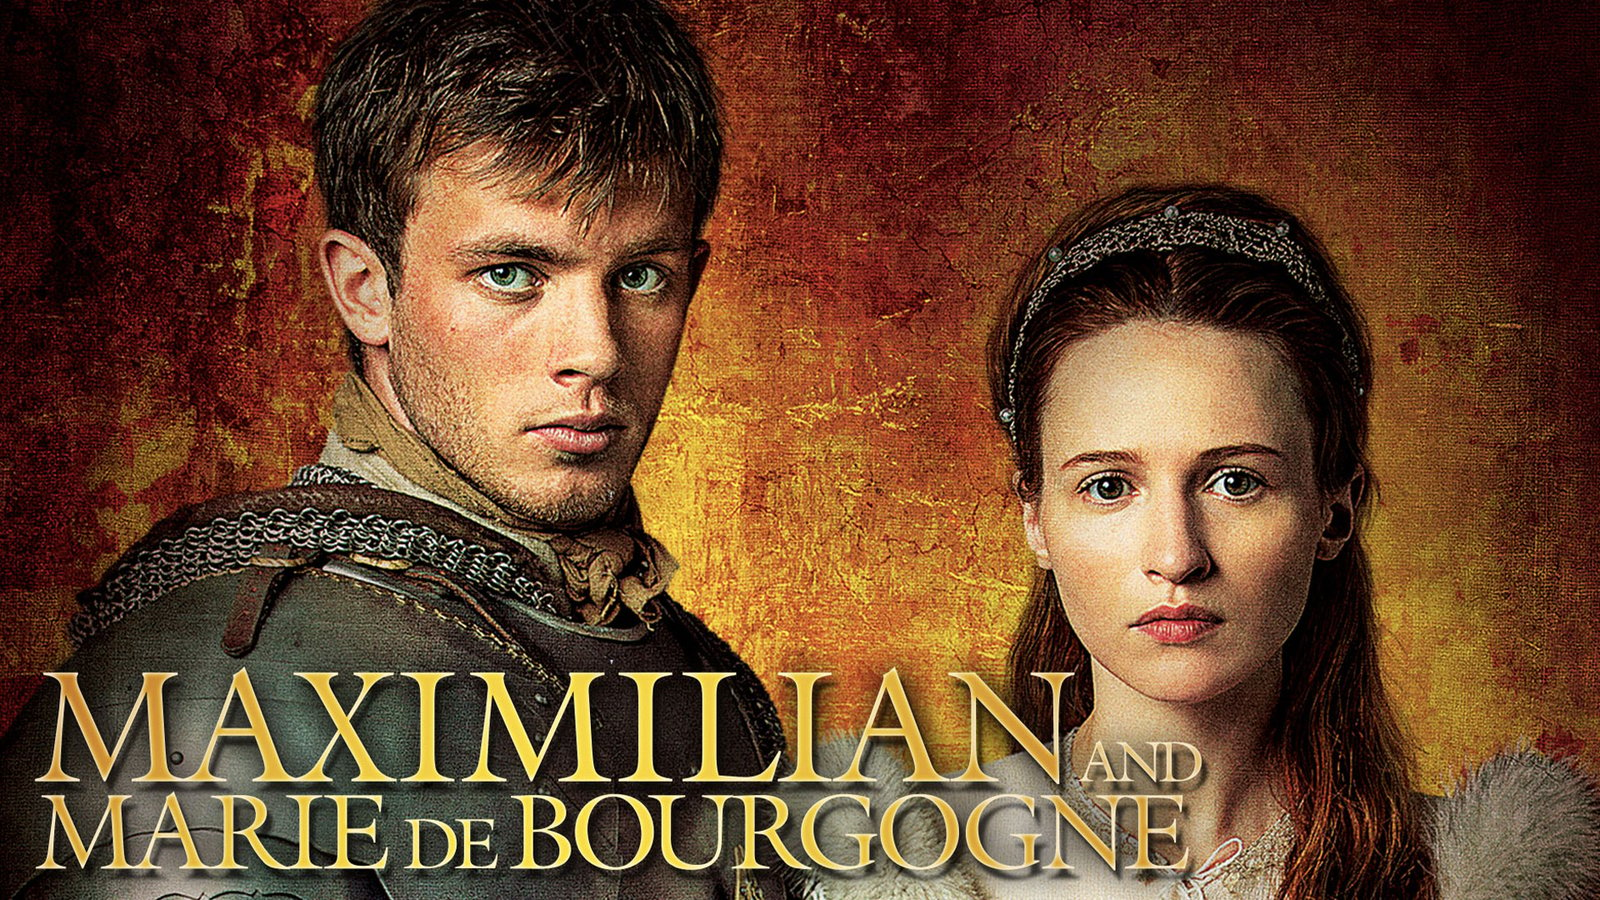 Maximilian and Marie de Bourgogne